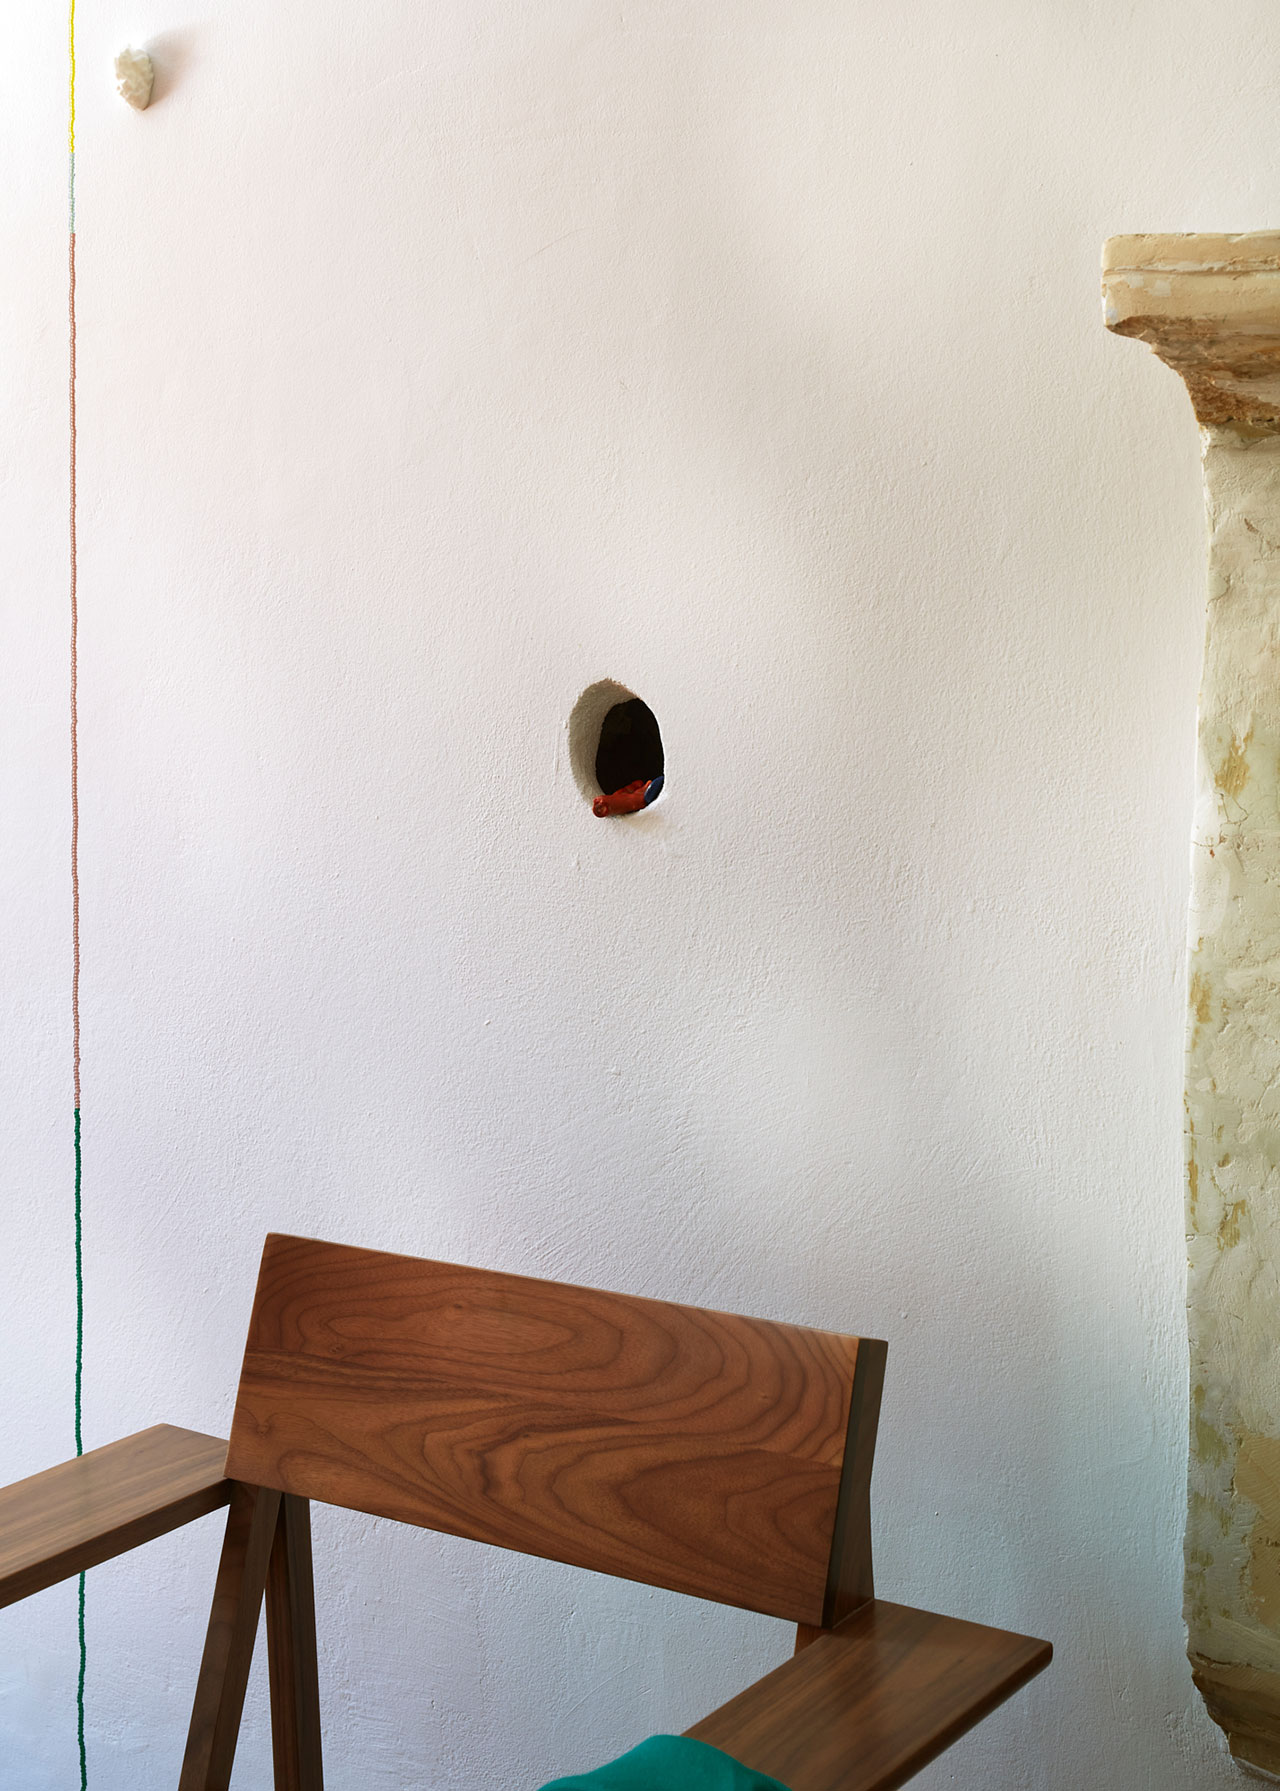 4Rooms Kastellorizo. Interior design project for La Società delle Api residency program. Room designed by Studio Brynjar &amp; Veronika. Photography by Depasquale+Maffini.